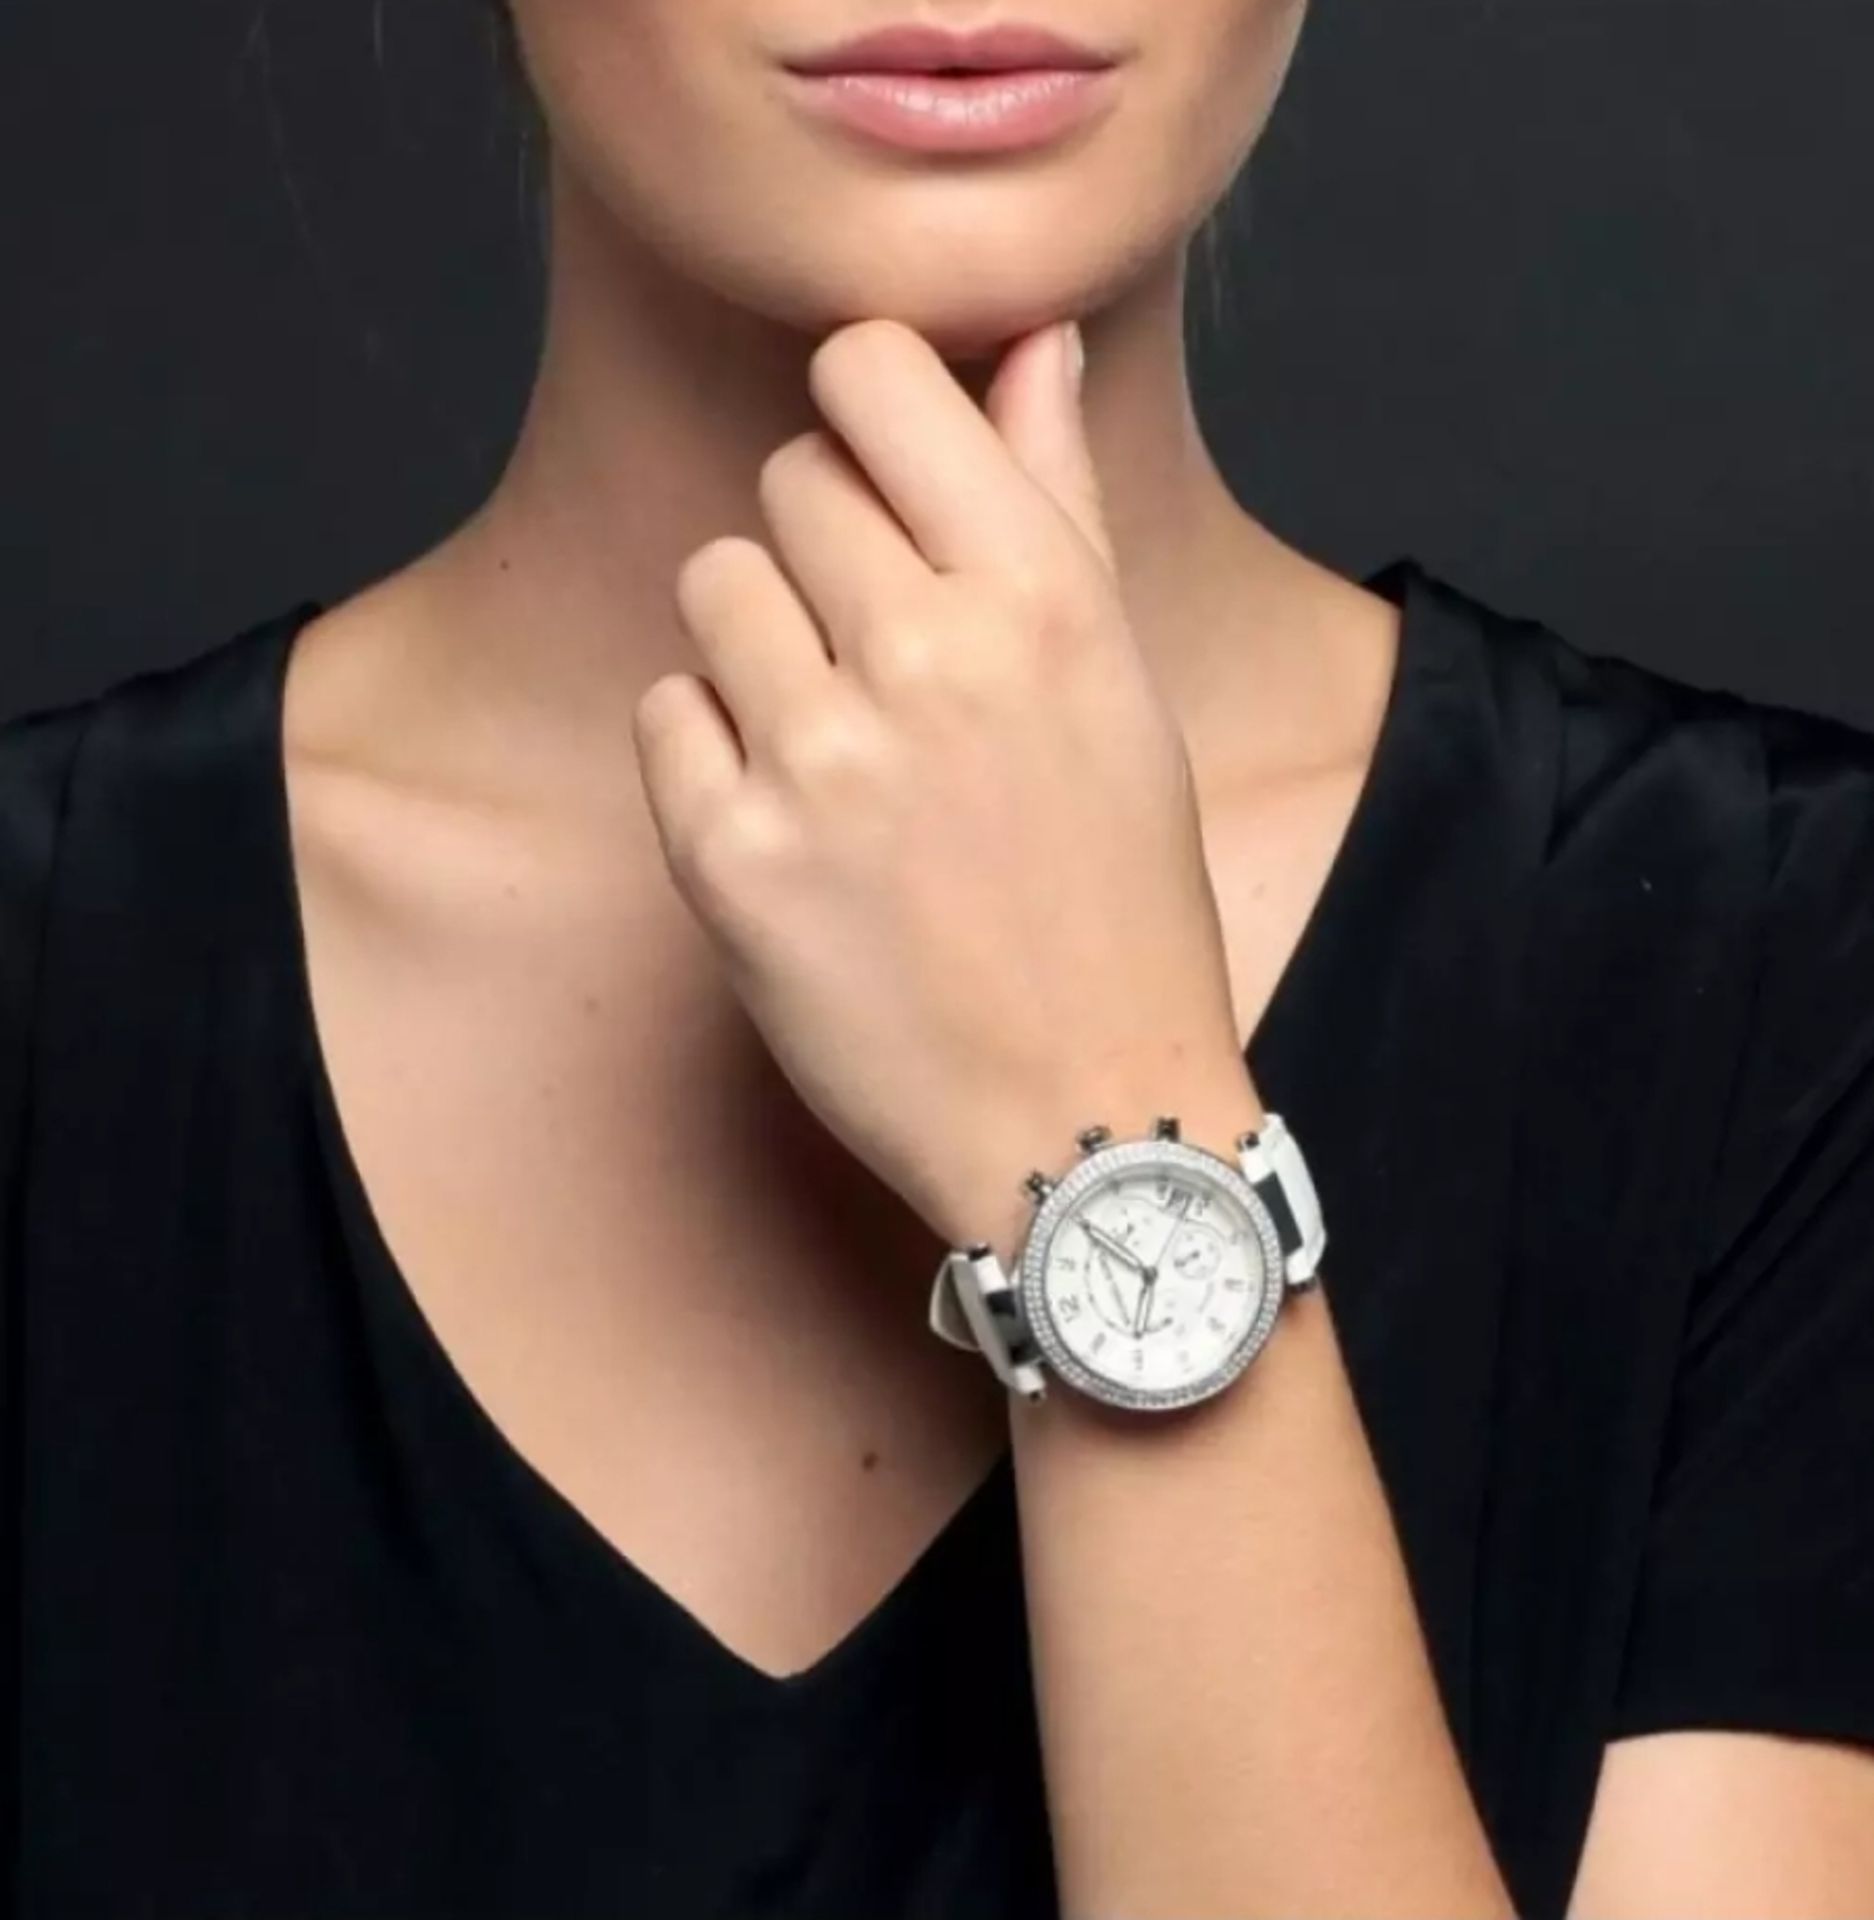 Michael Kors MK2277 Ladies Parker White Leather Strap quartz Chronograph Designer Watch - Image 7 of 8